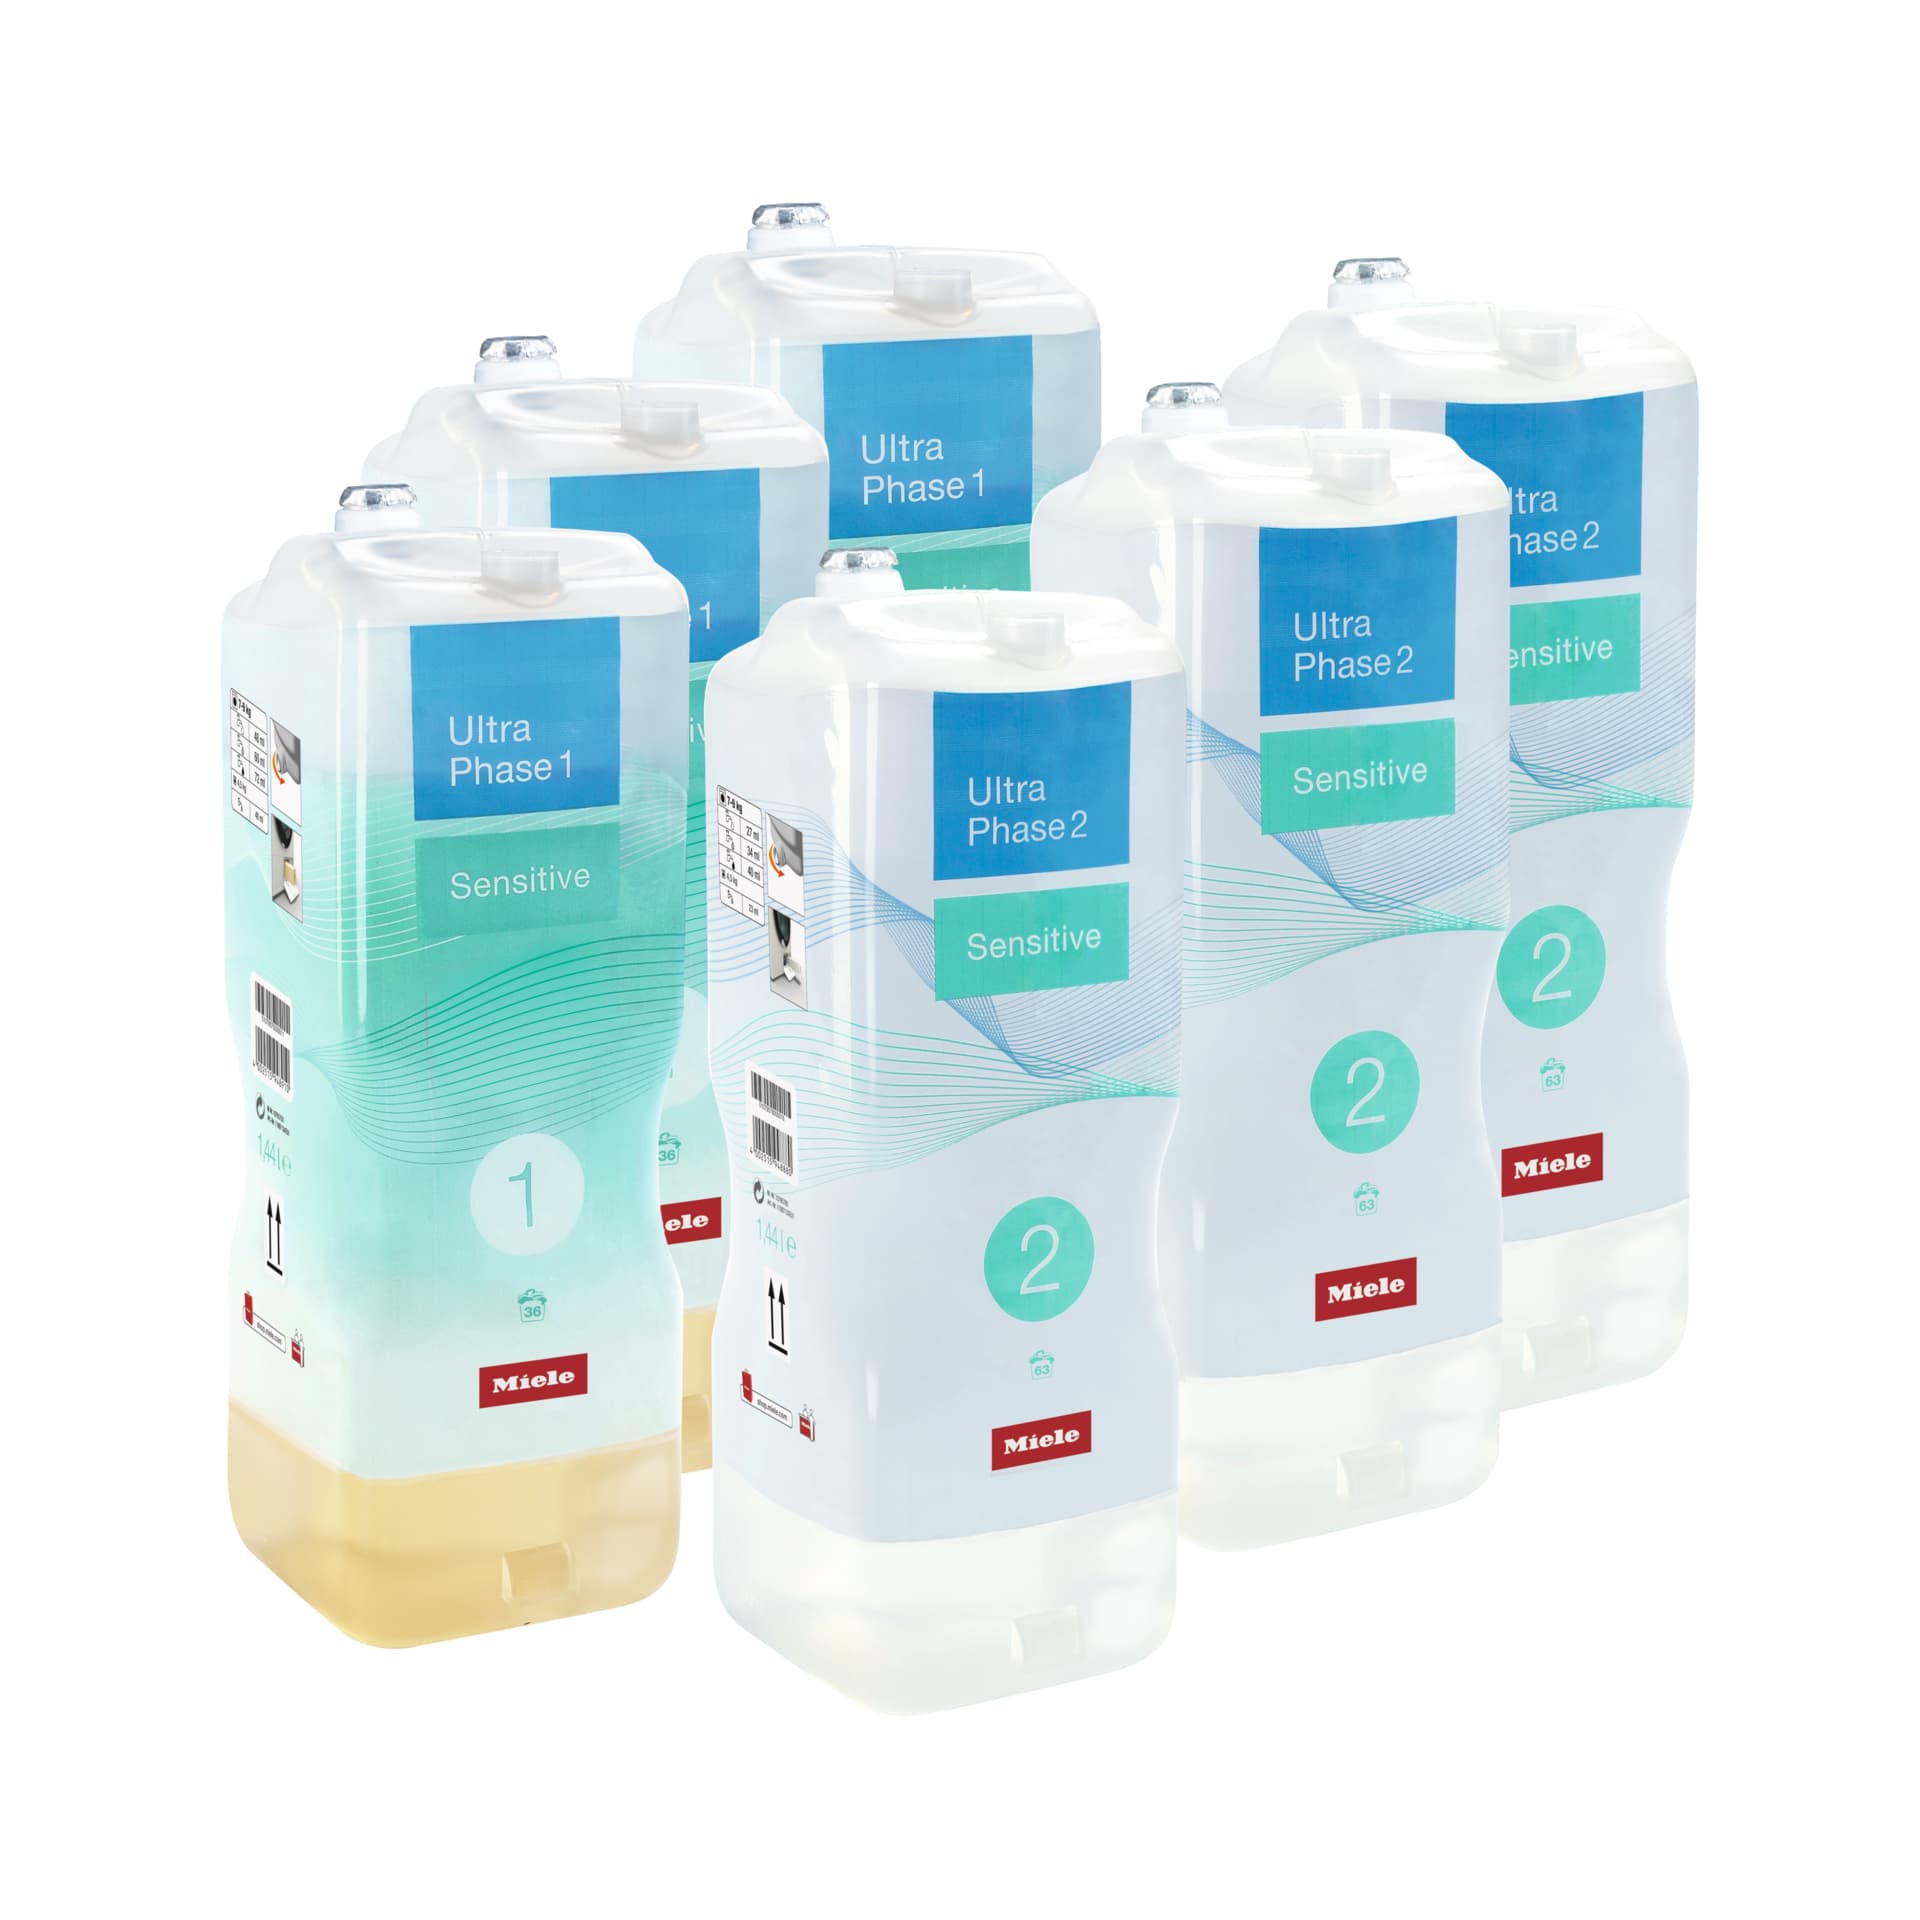 Miele Waschmittel Set 6 UltraPhase Sensitive Miele UltraPhase 1 und 2 Sensitive Halbjahresvorrat Miele Sensitive Waschmittel 